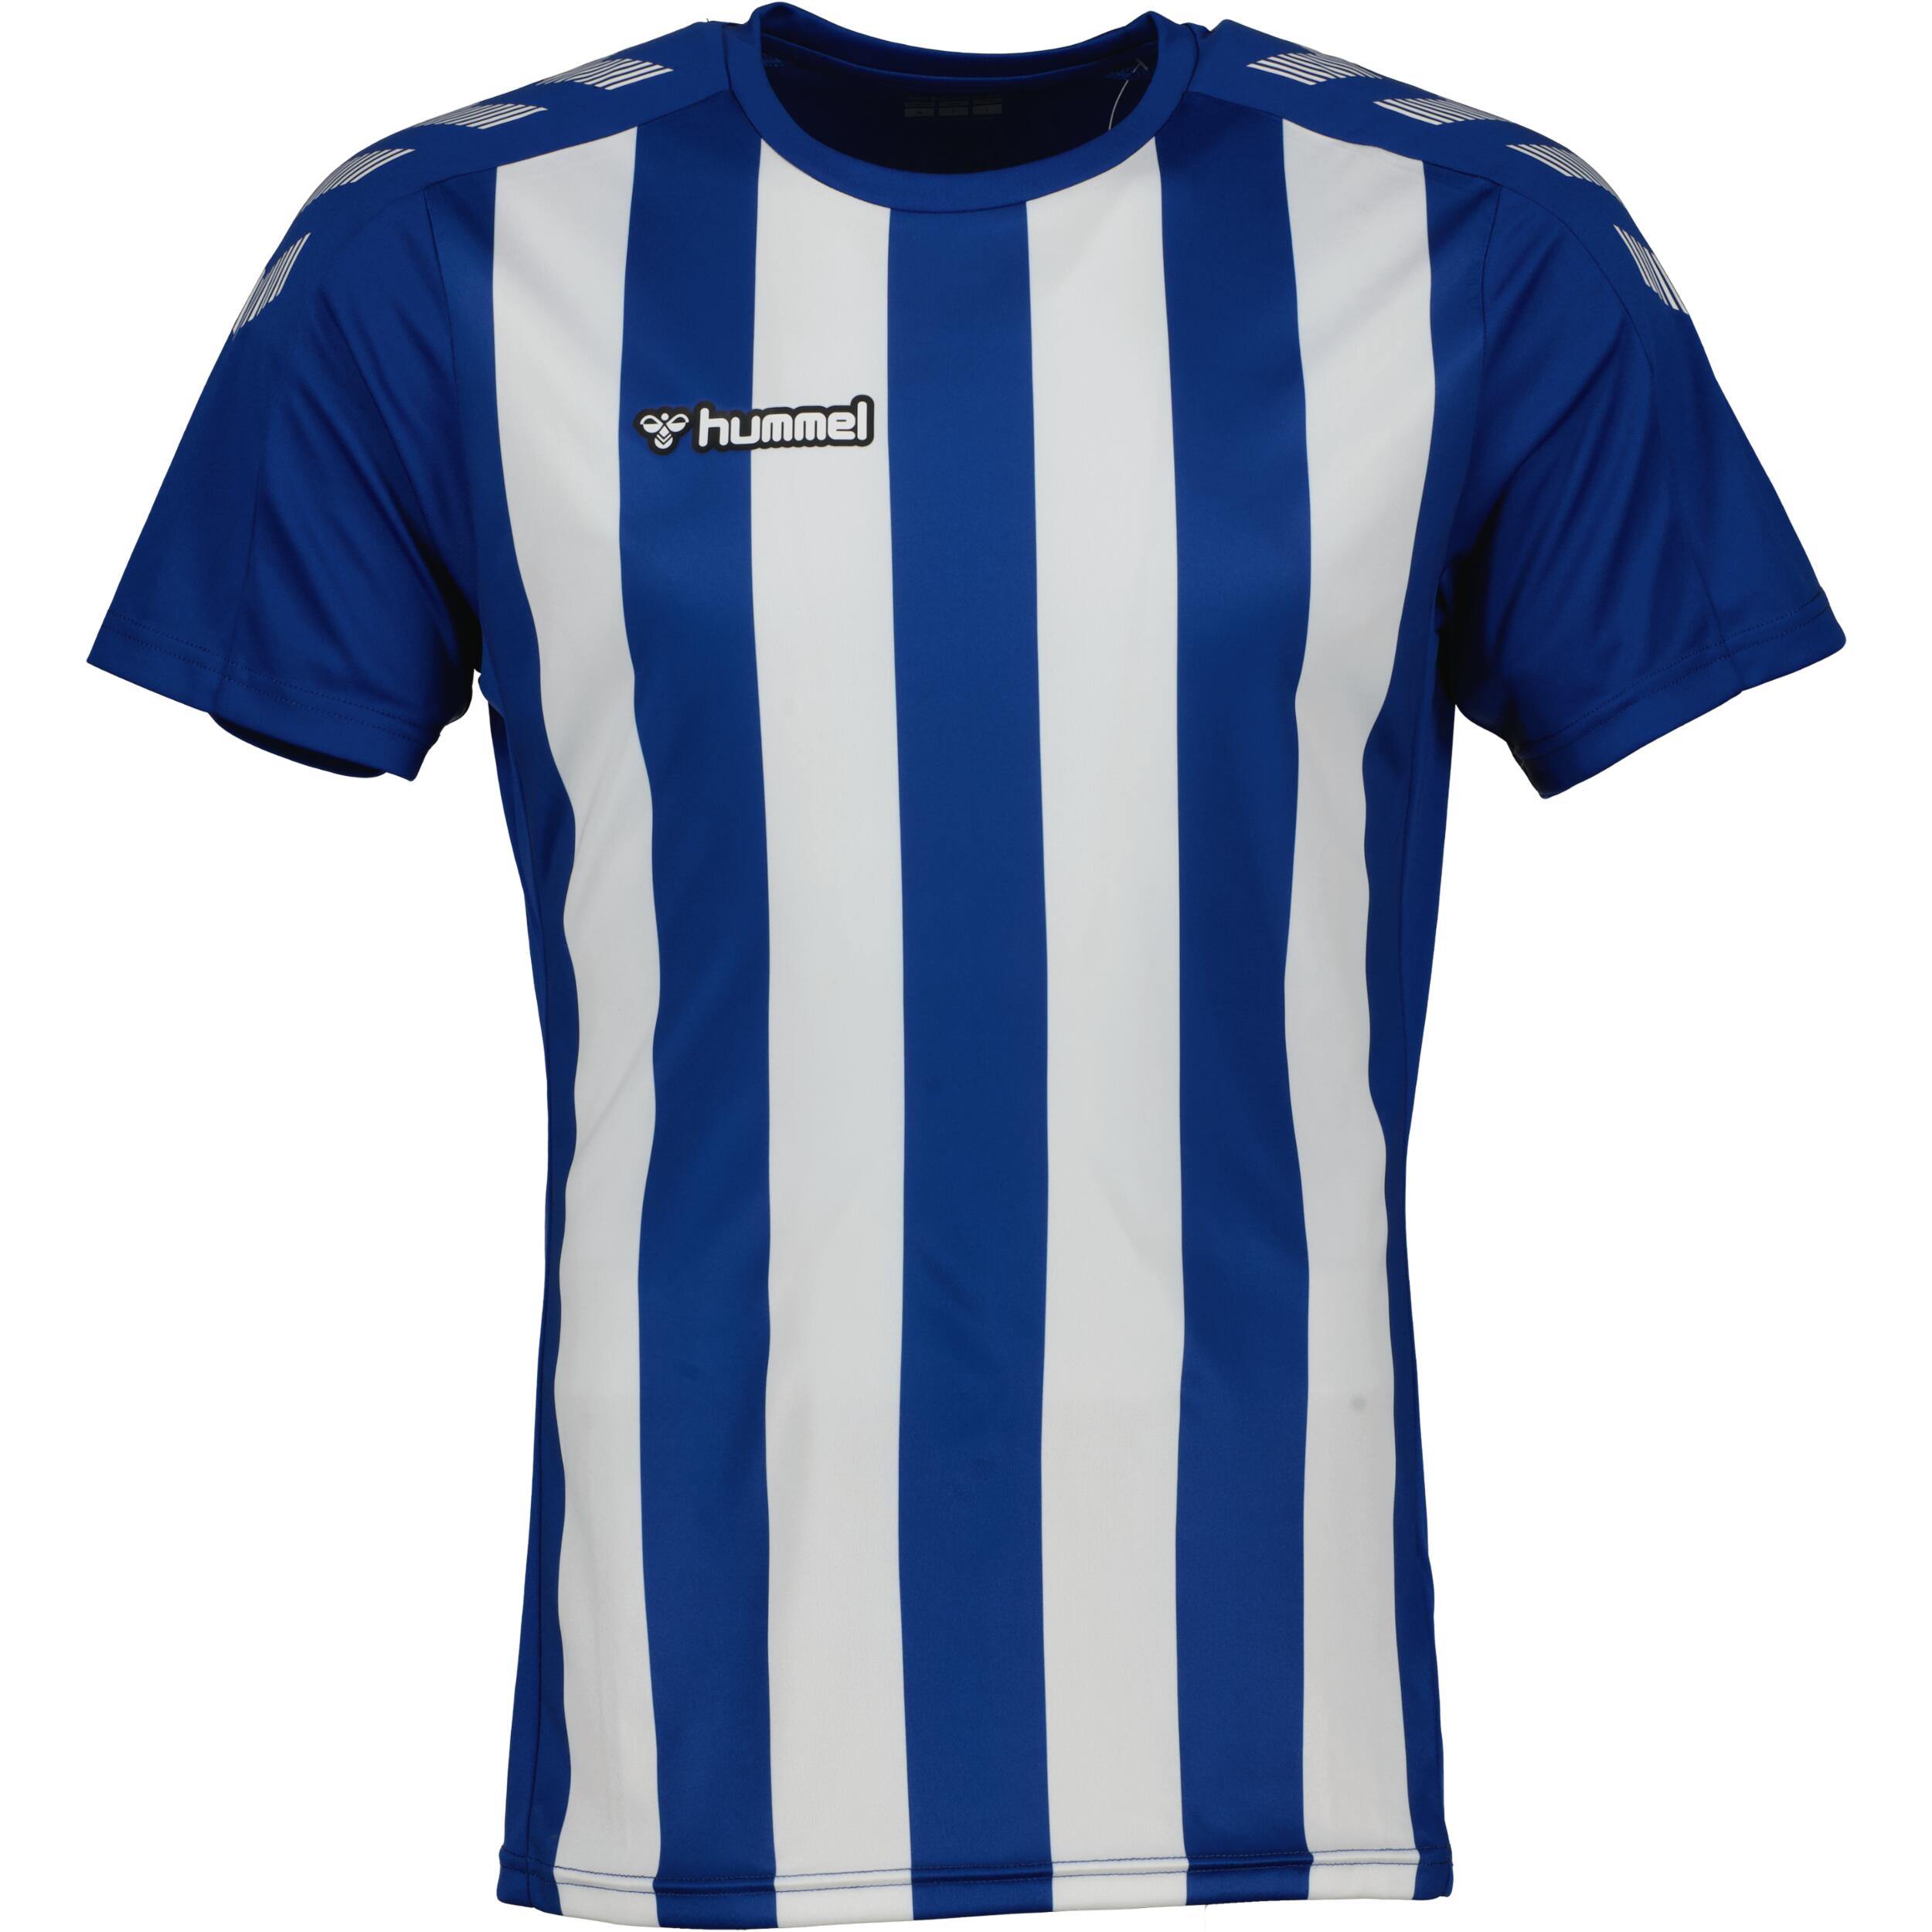 HUMMEL Stripe jersey for kids, great for football, in true blue/white